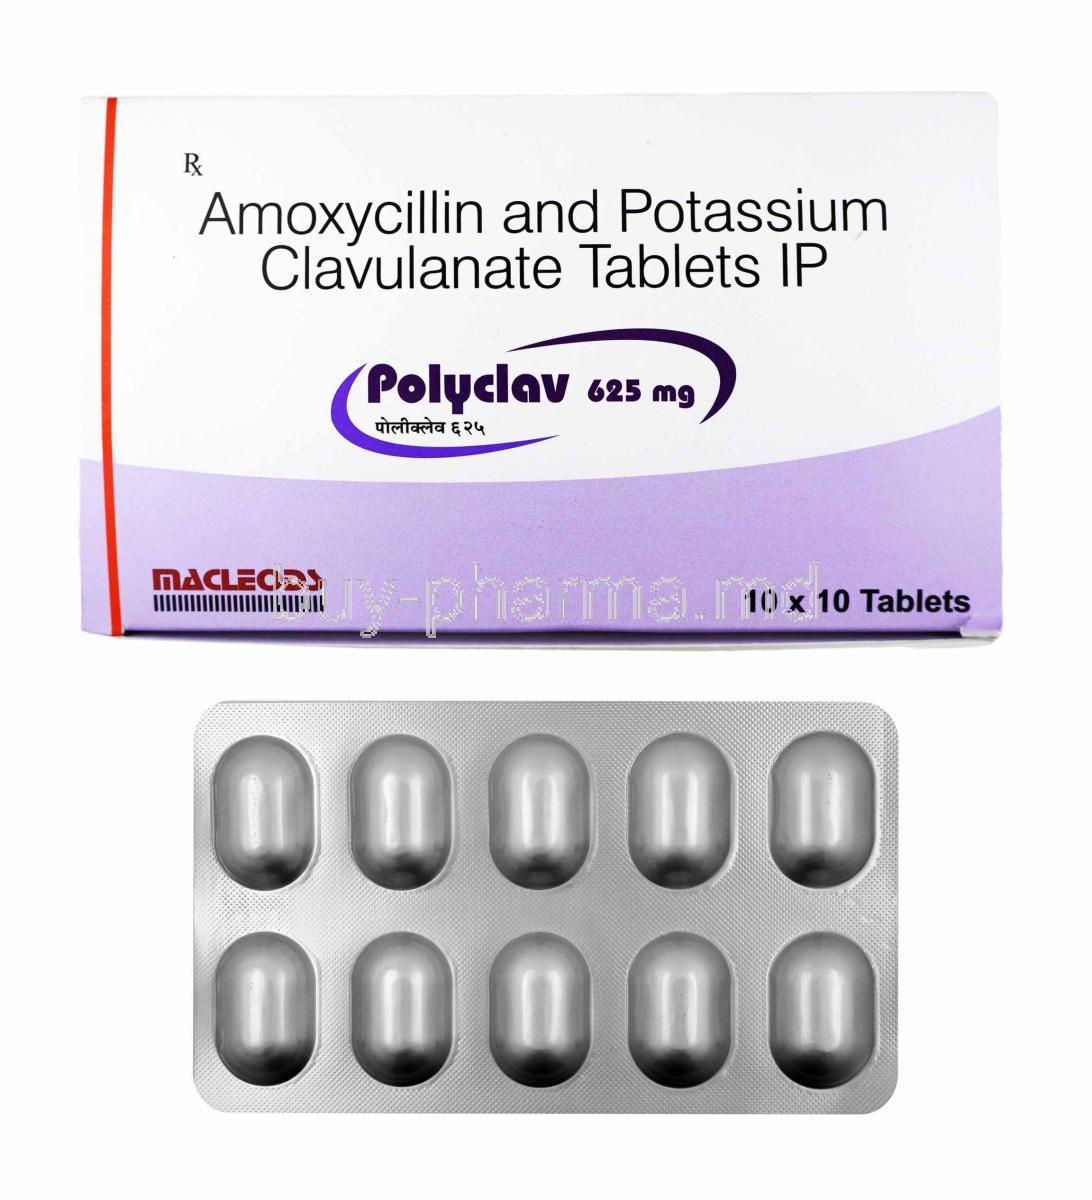 Polyclav, Amoxicillin and Clavulanic Acid 625mg box and tablets